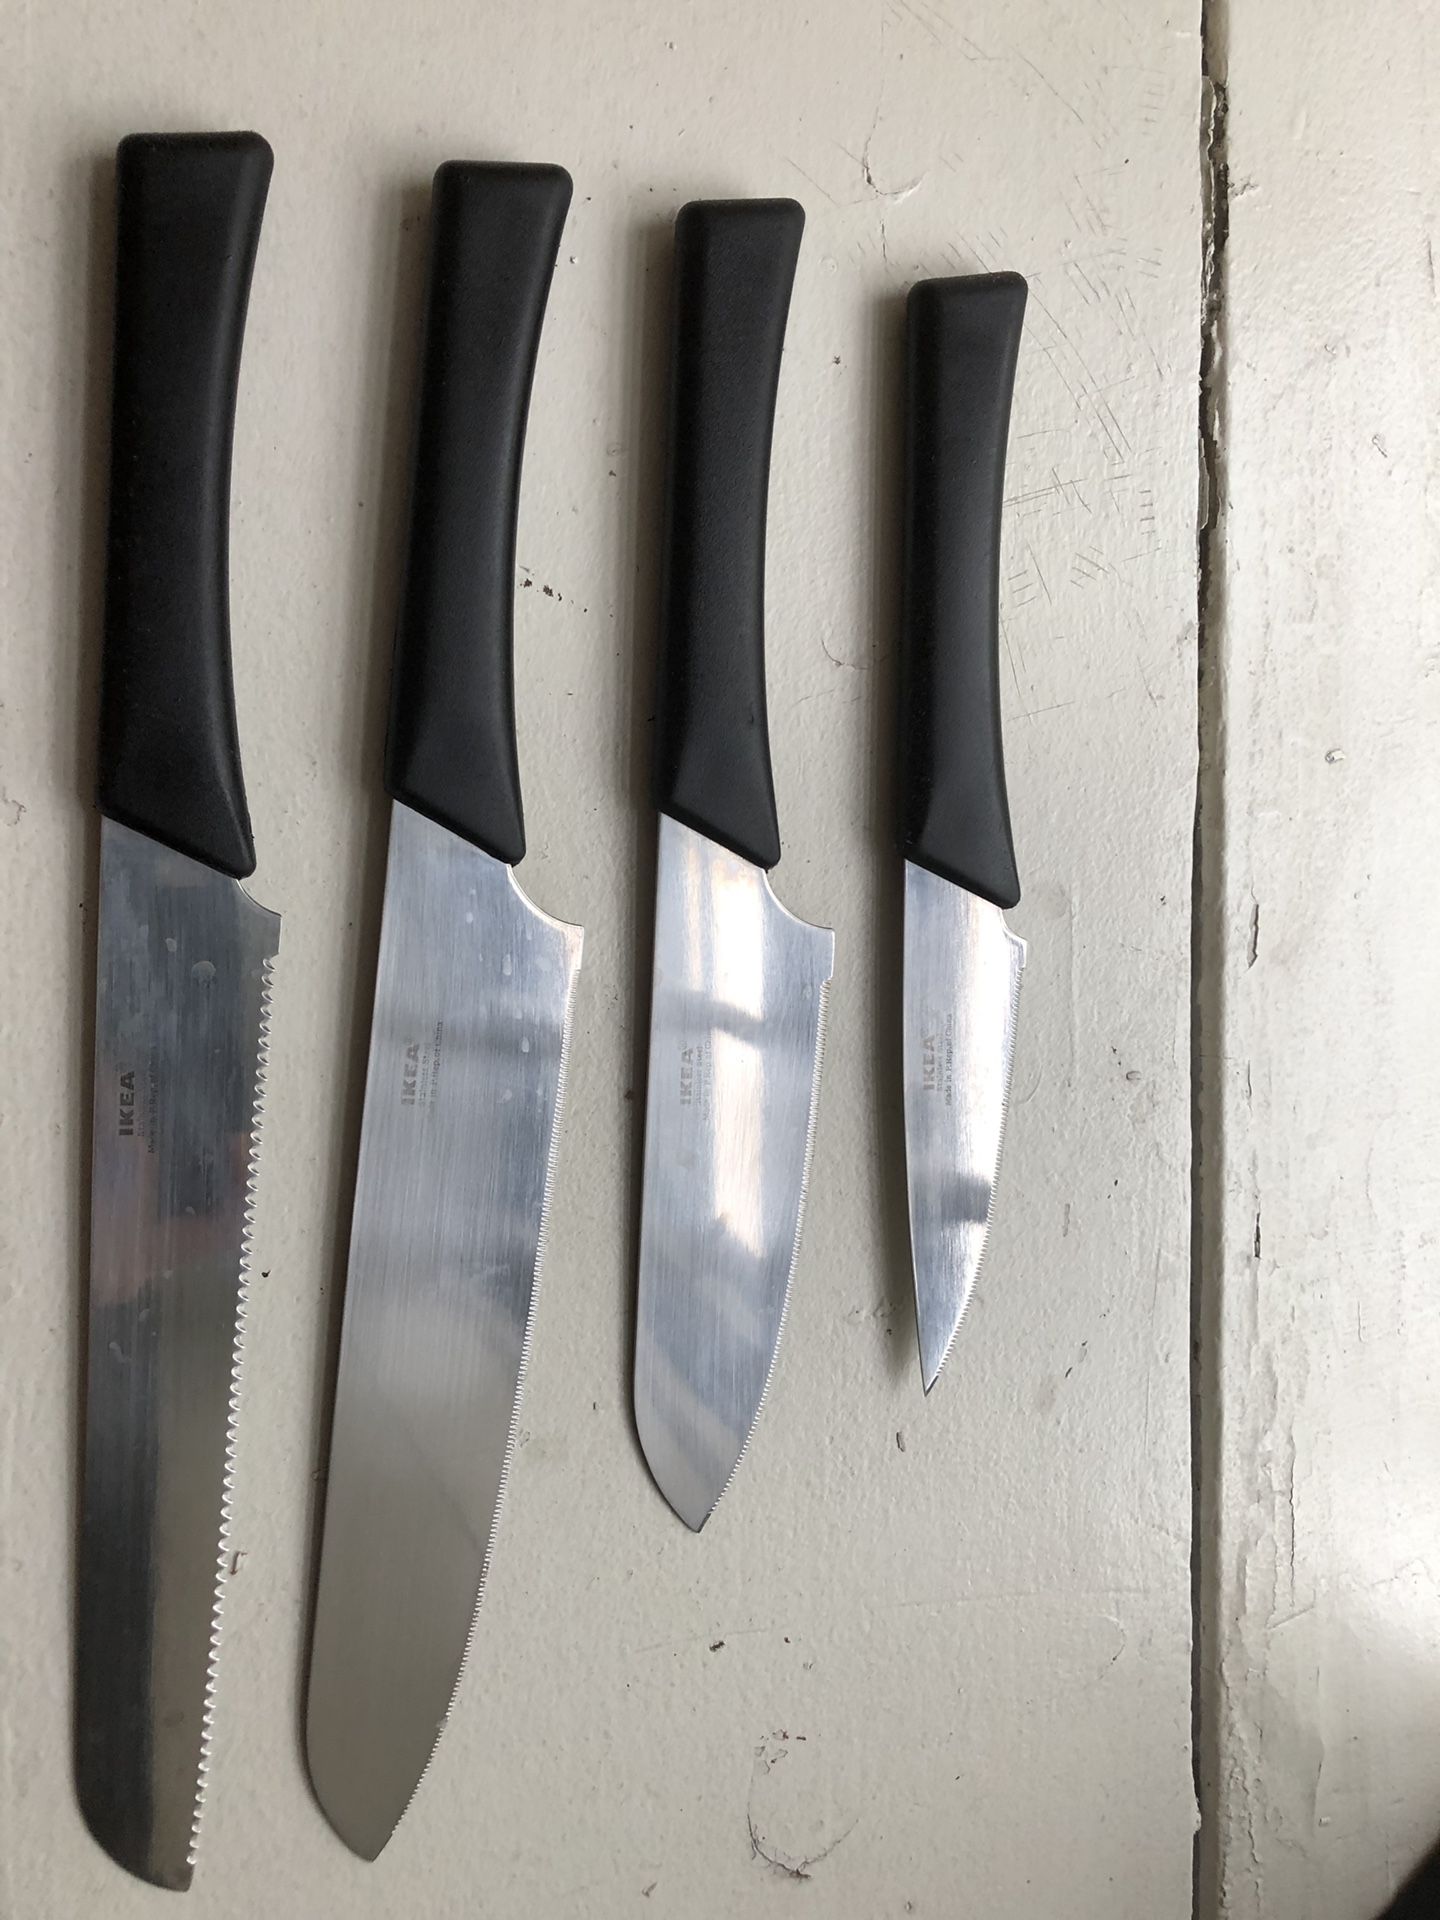 IKEA 5 Piece Kitchen Knife Set 4 knives Wooden Block